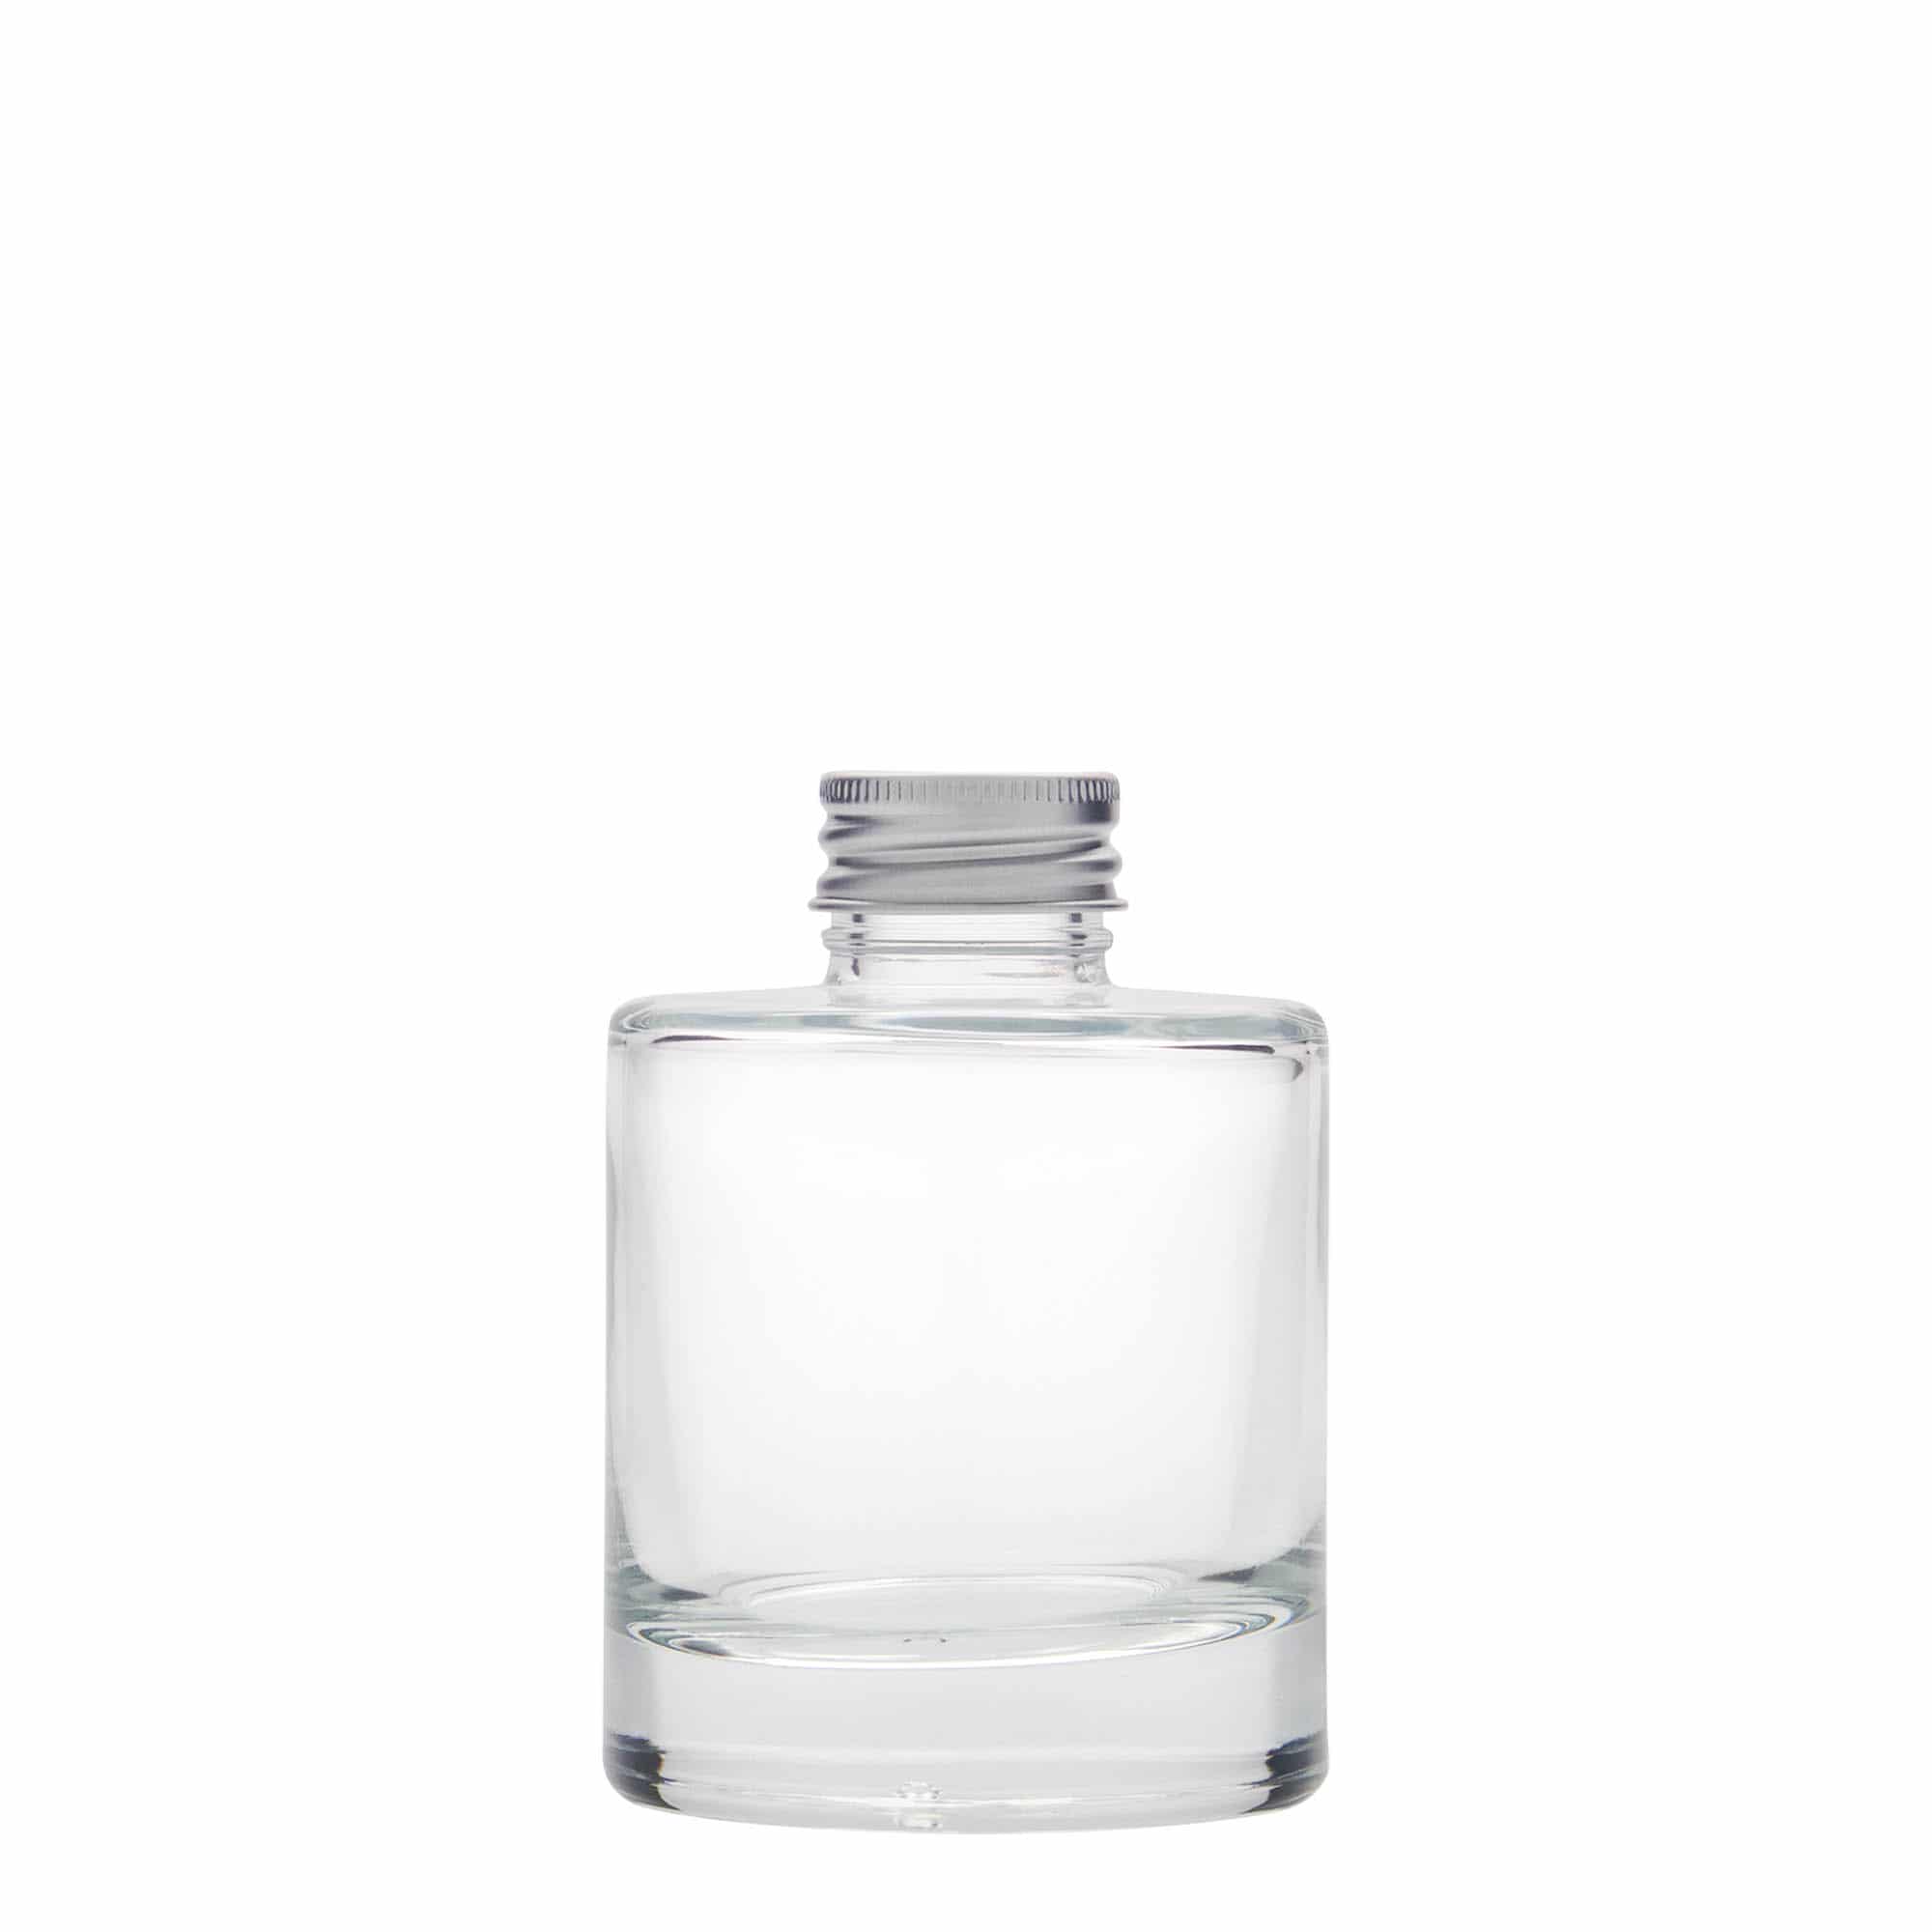 100 ml glass bottle 'Flamenco', closure: GPI 28/410